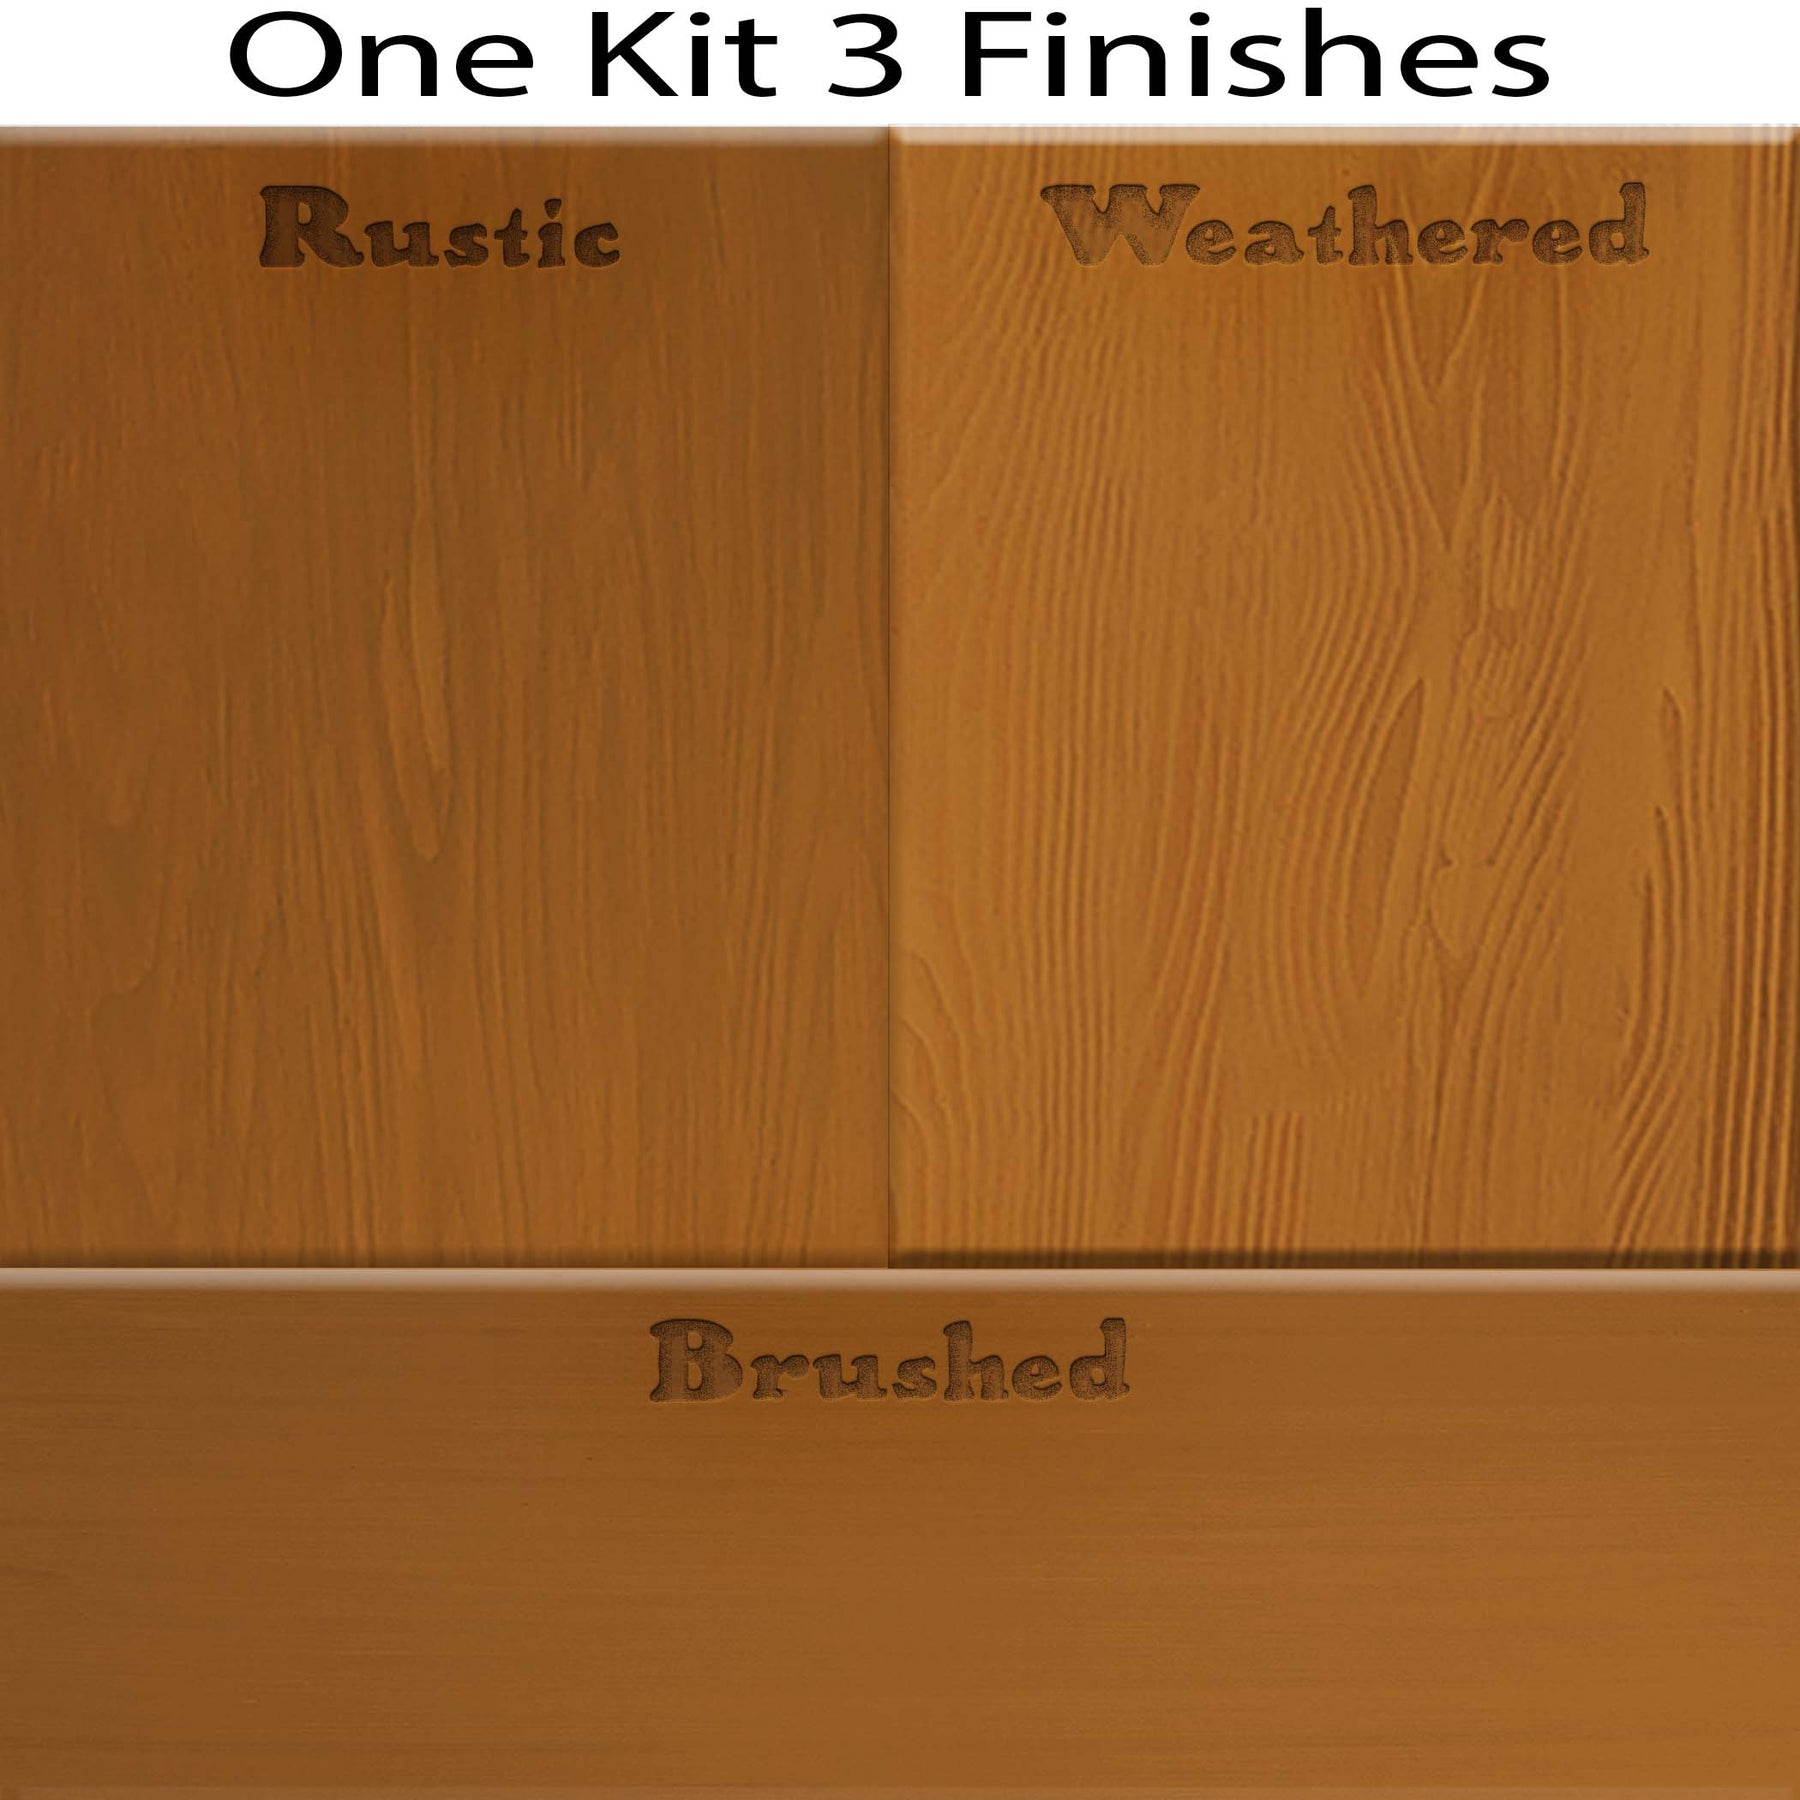 Wood'n Cabinet Kit (12 Door / Grained) - Cedar